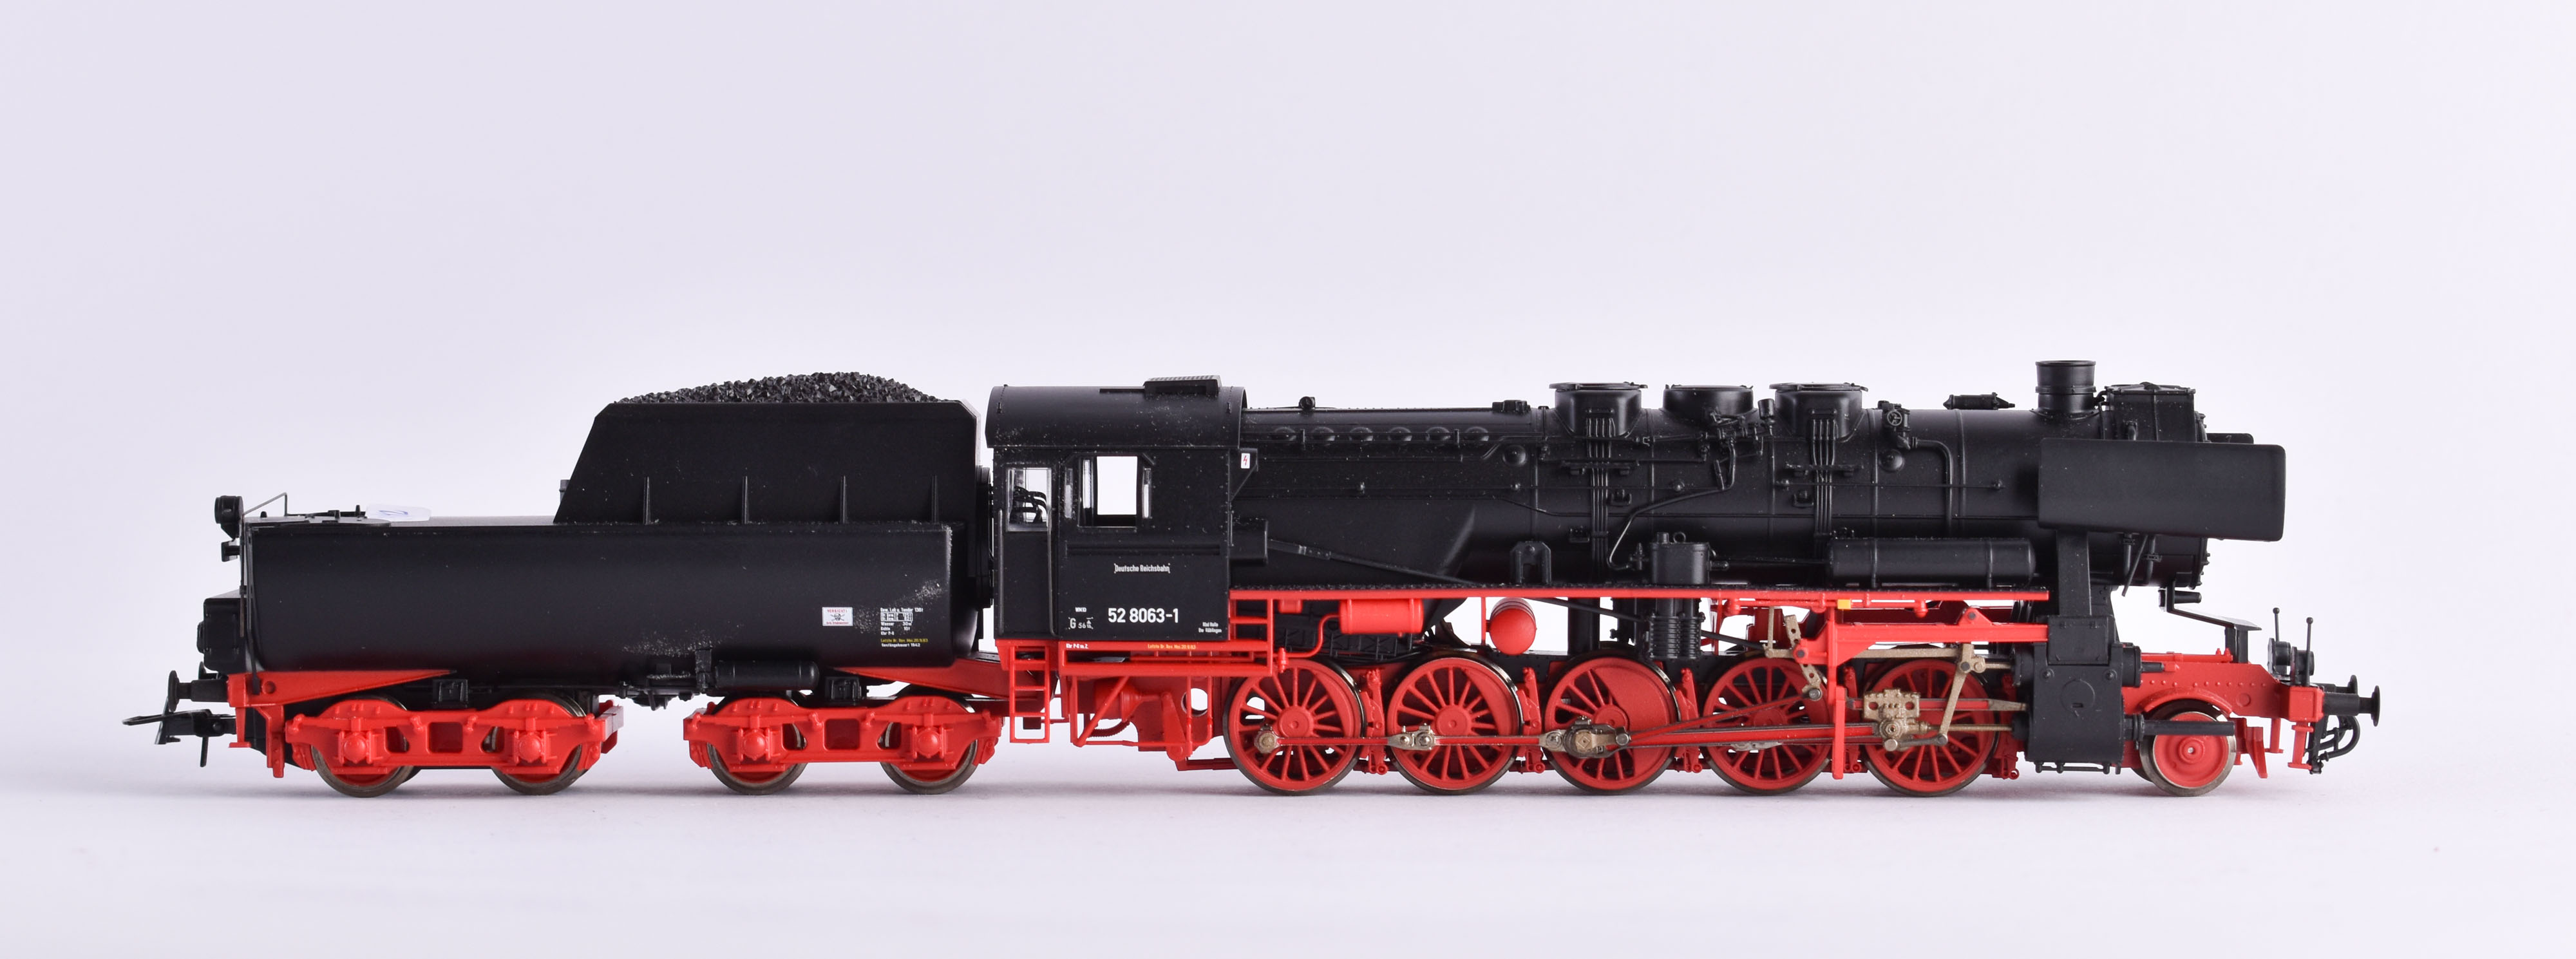 Steam locomotive BR 52 8063-1 of the DR, Roco